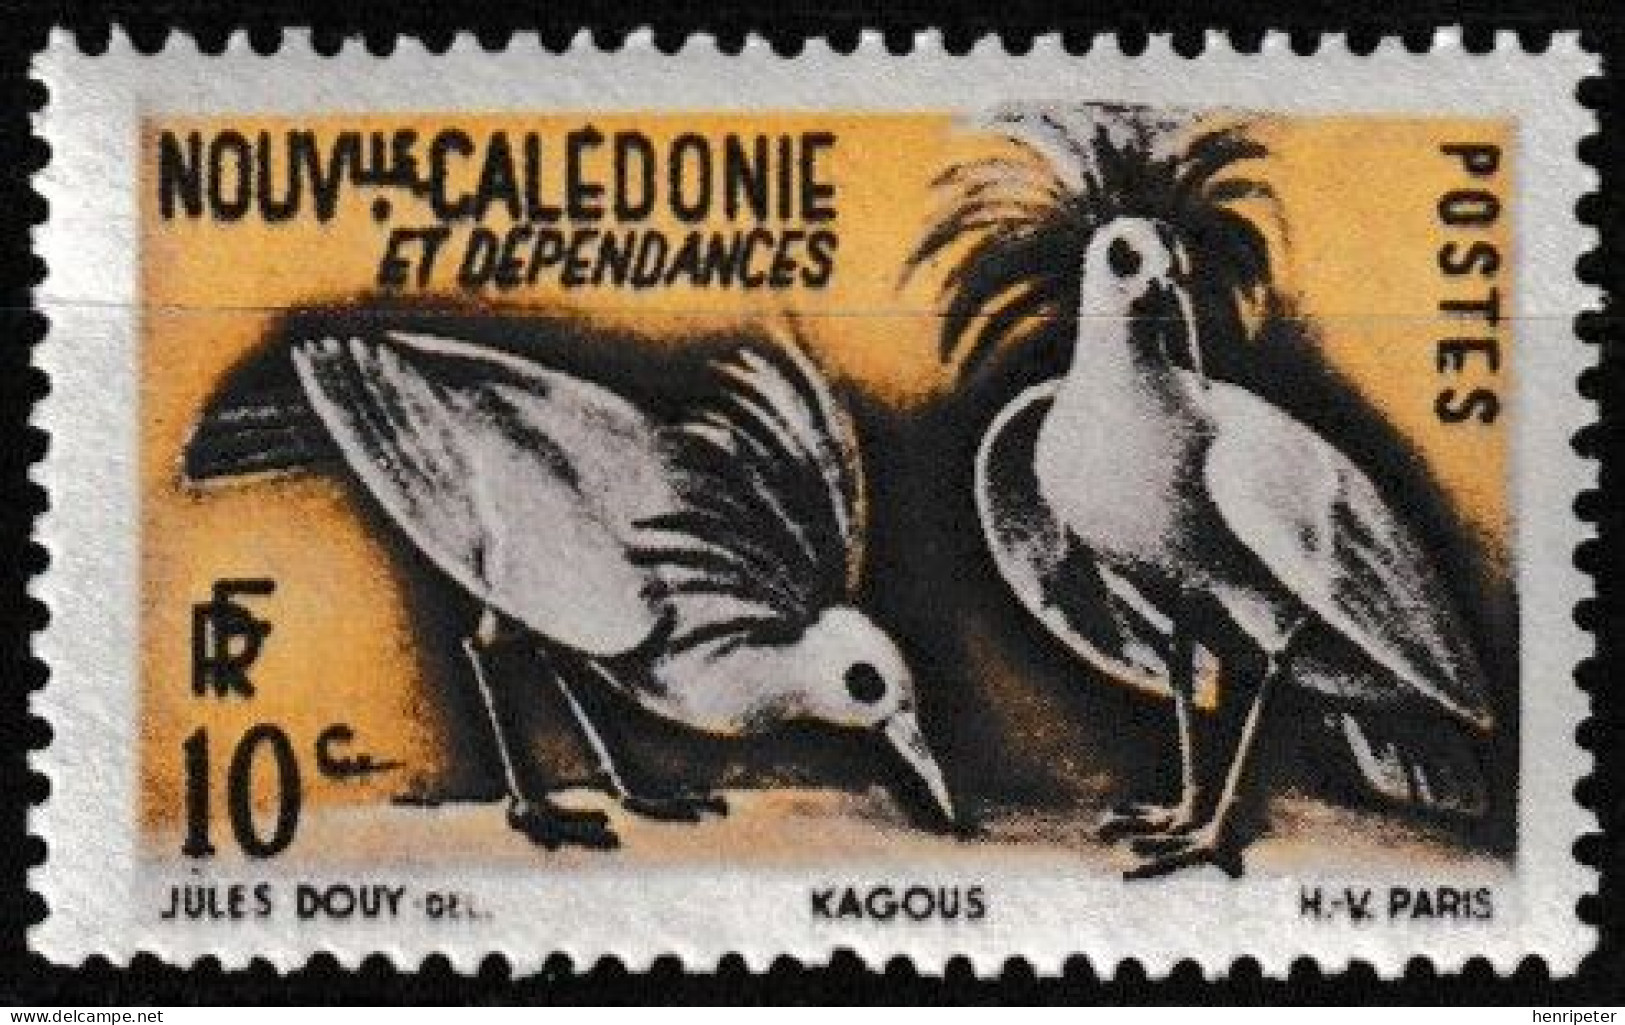 Timbre-poste Gommé Neuf** - Cagous Kagu (Rhynochetos Jubatus) - N° 259 (Yvert) - Nouvelle-Calédonie Et Dépendances 1948 - Neufs